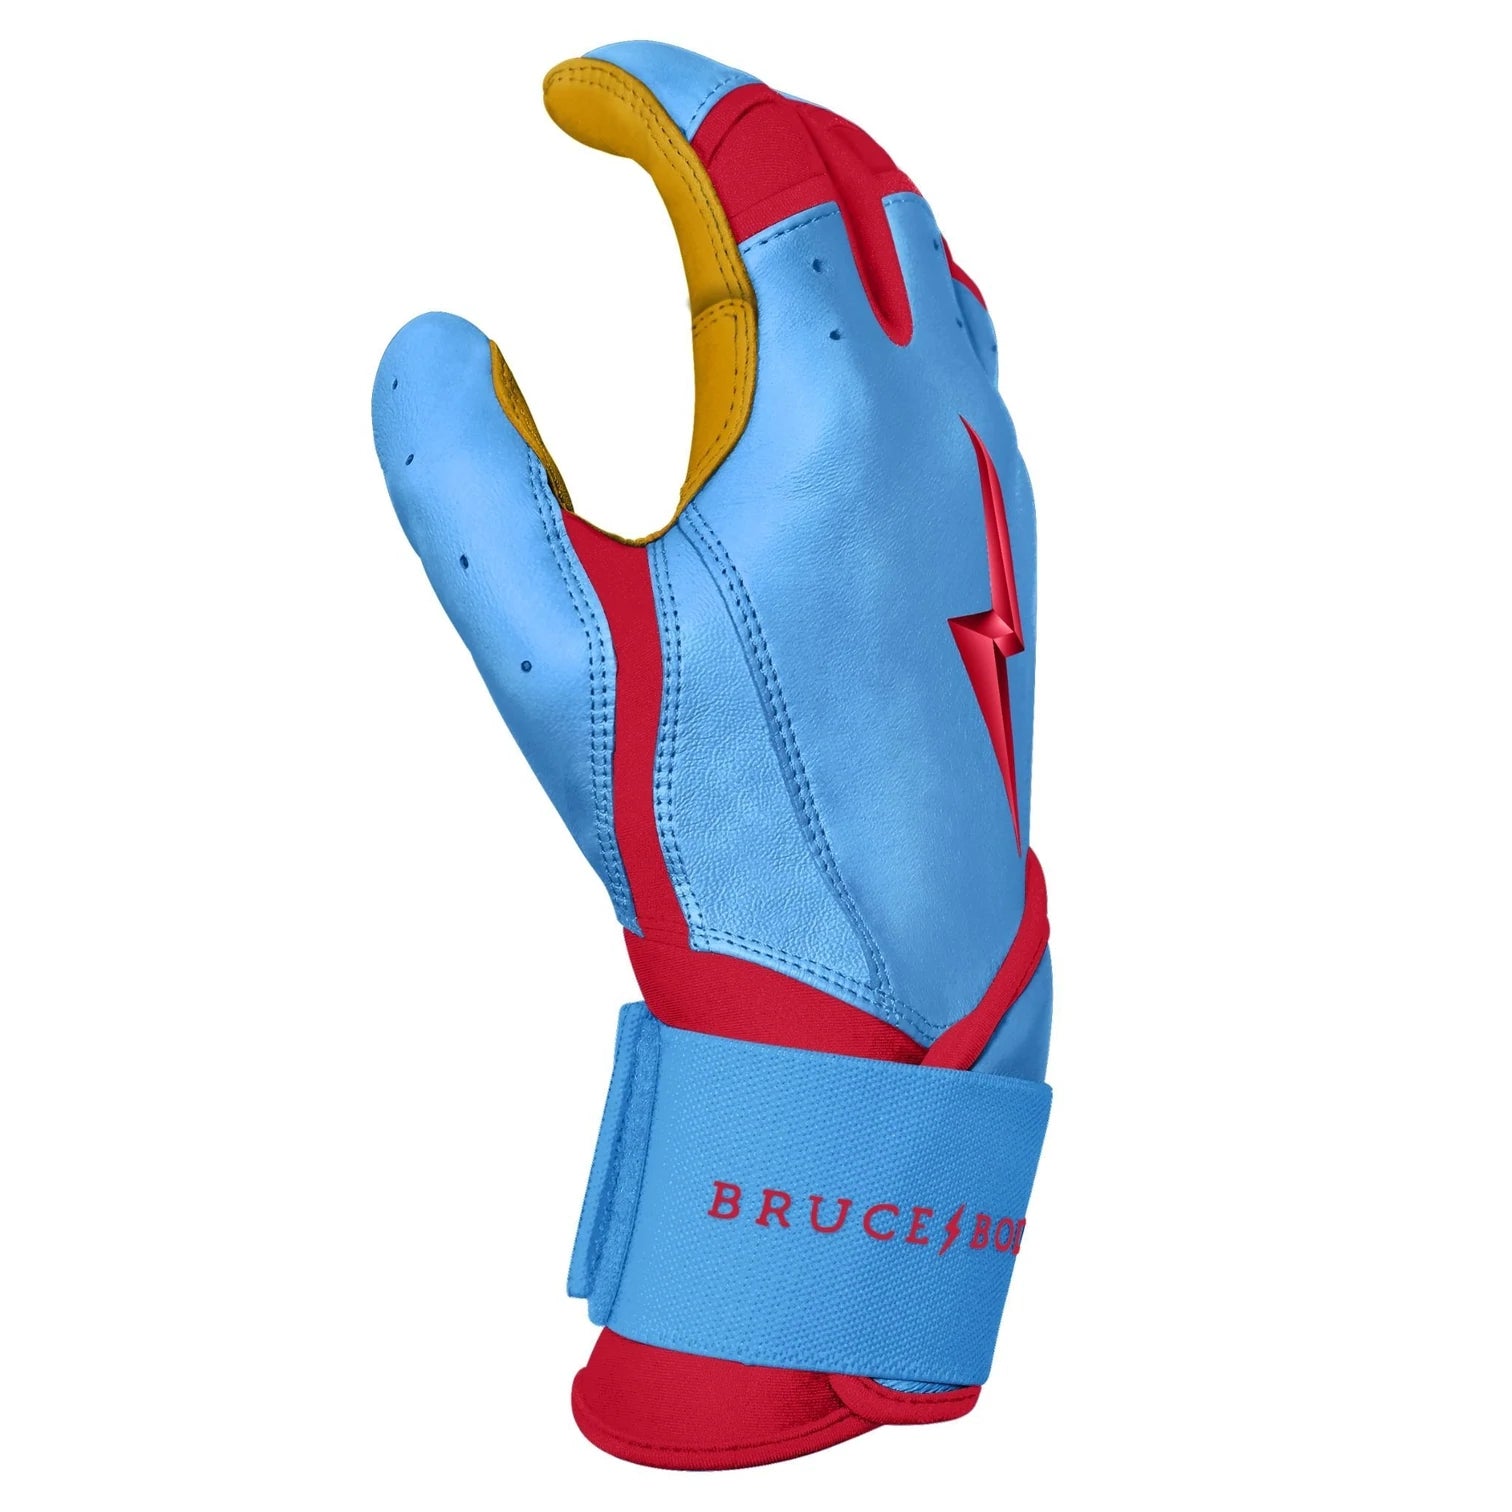 Bruce Bolt - BADER Series Adult Long Cuff Batting Gloves | BABY BLUE